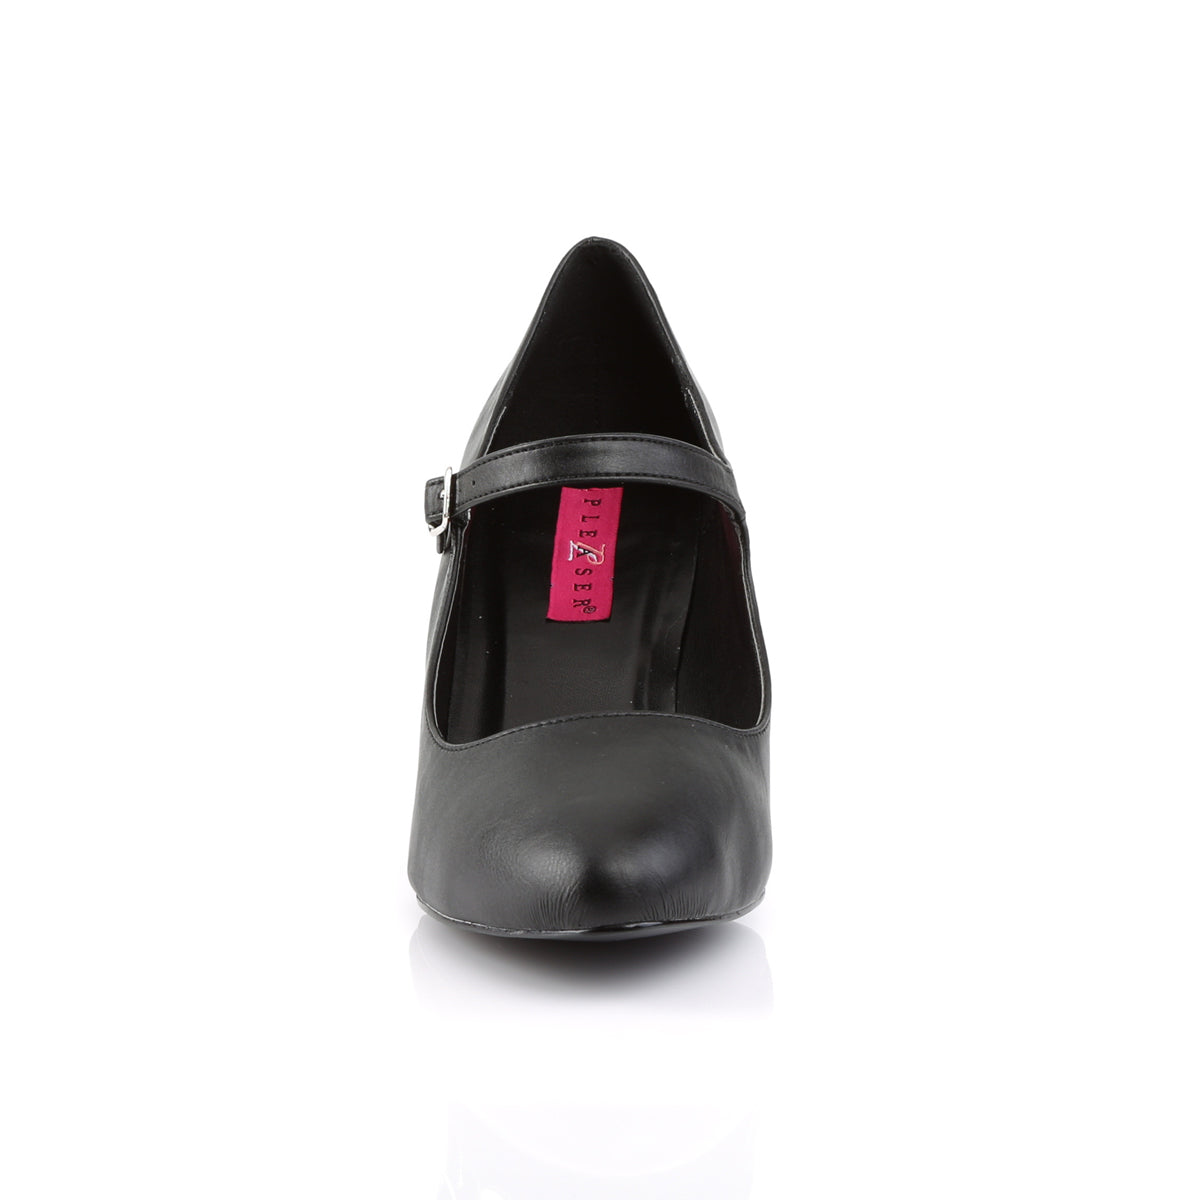 DIVINE-440 Pleaser Pink Label 3 Inch Heel Black Fetish Shoes-Pleaser Pink Label- Drag Queen Shoes